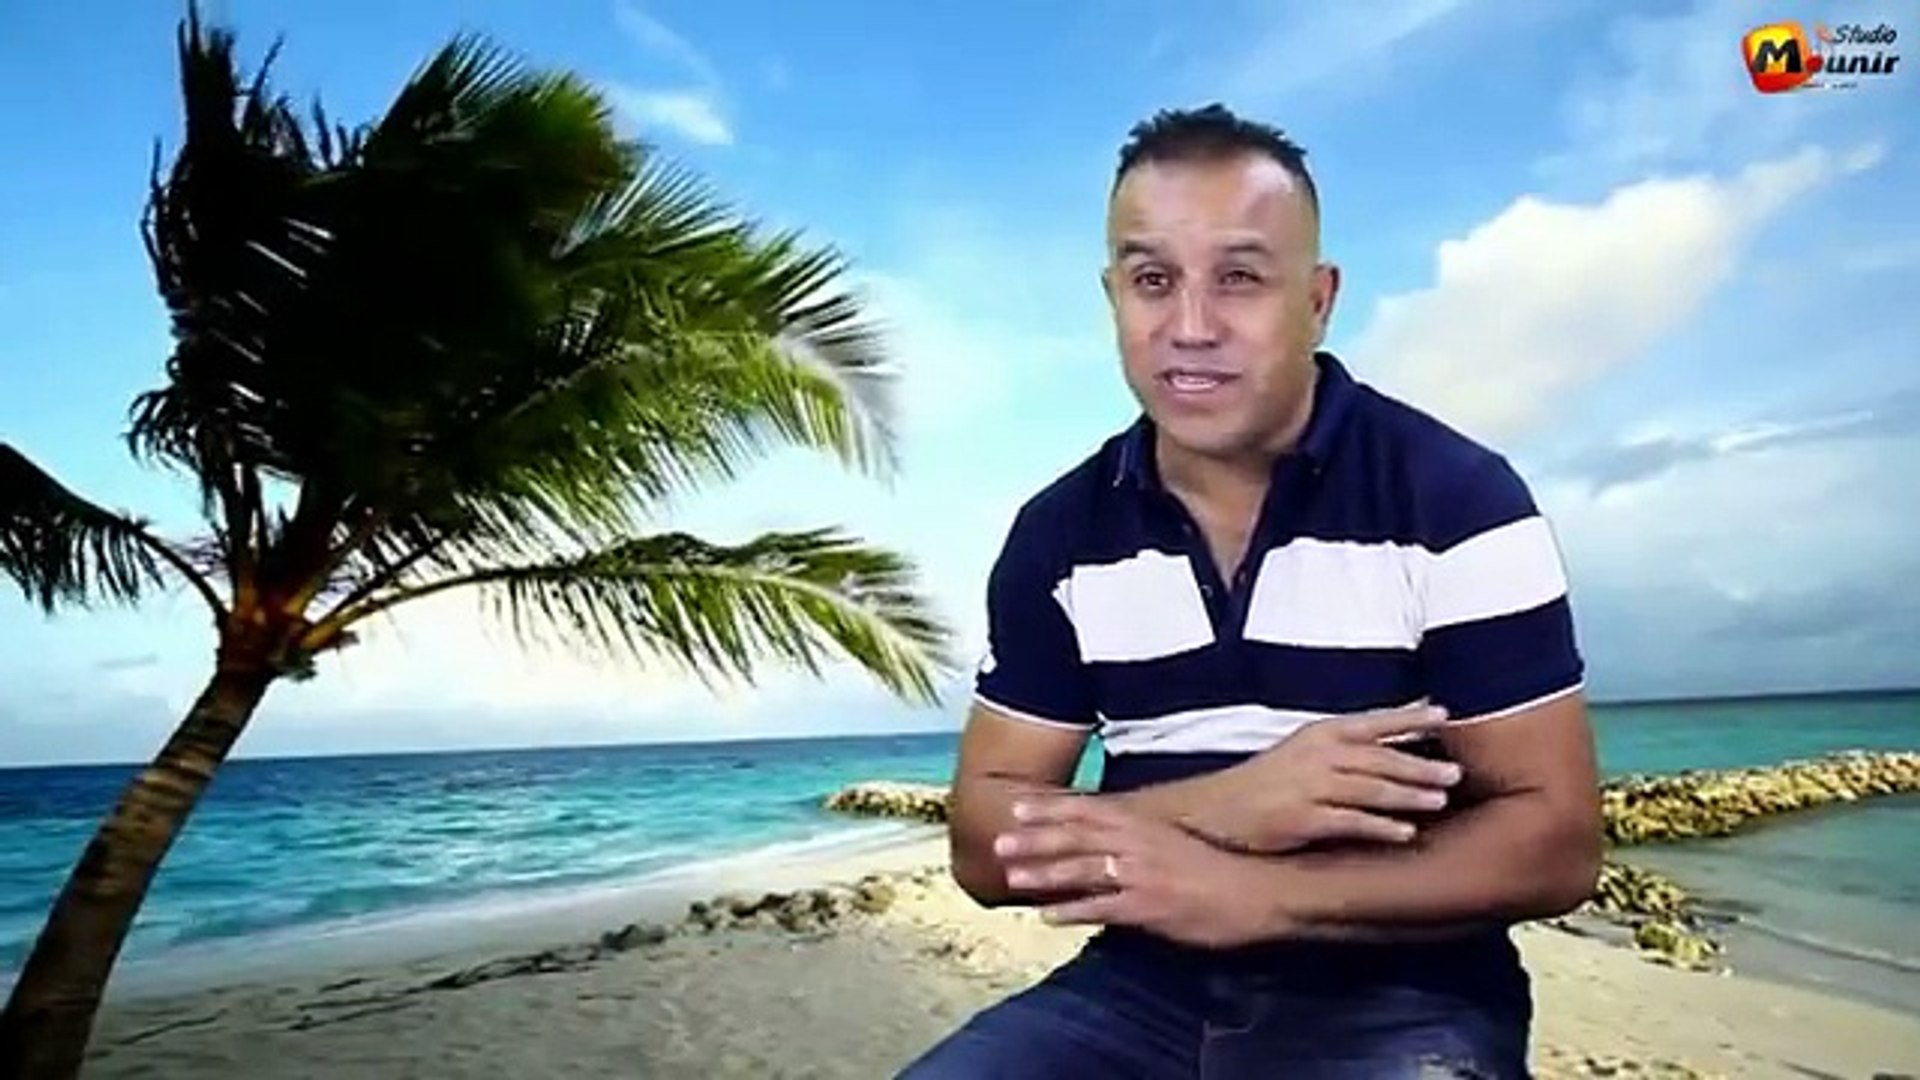 simo issaou 2018 - sabri m3aya mimti - سيمو العيساوي صبري معايا ميمتي -  فيديو Dailymotion